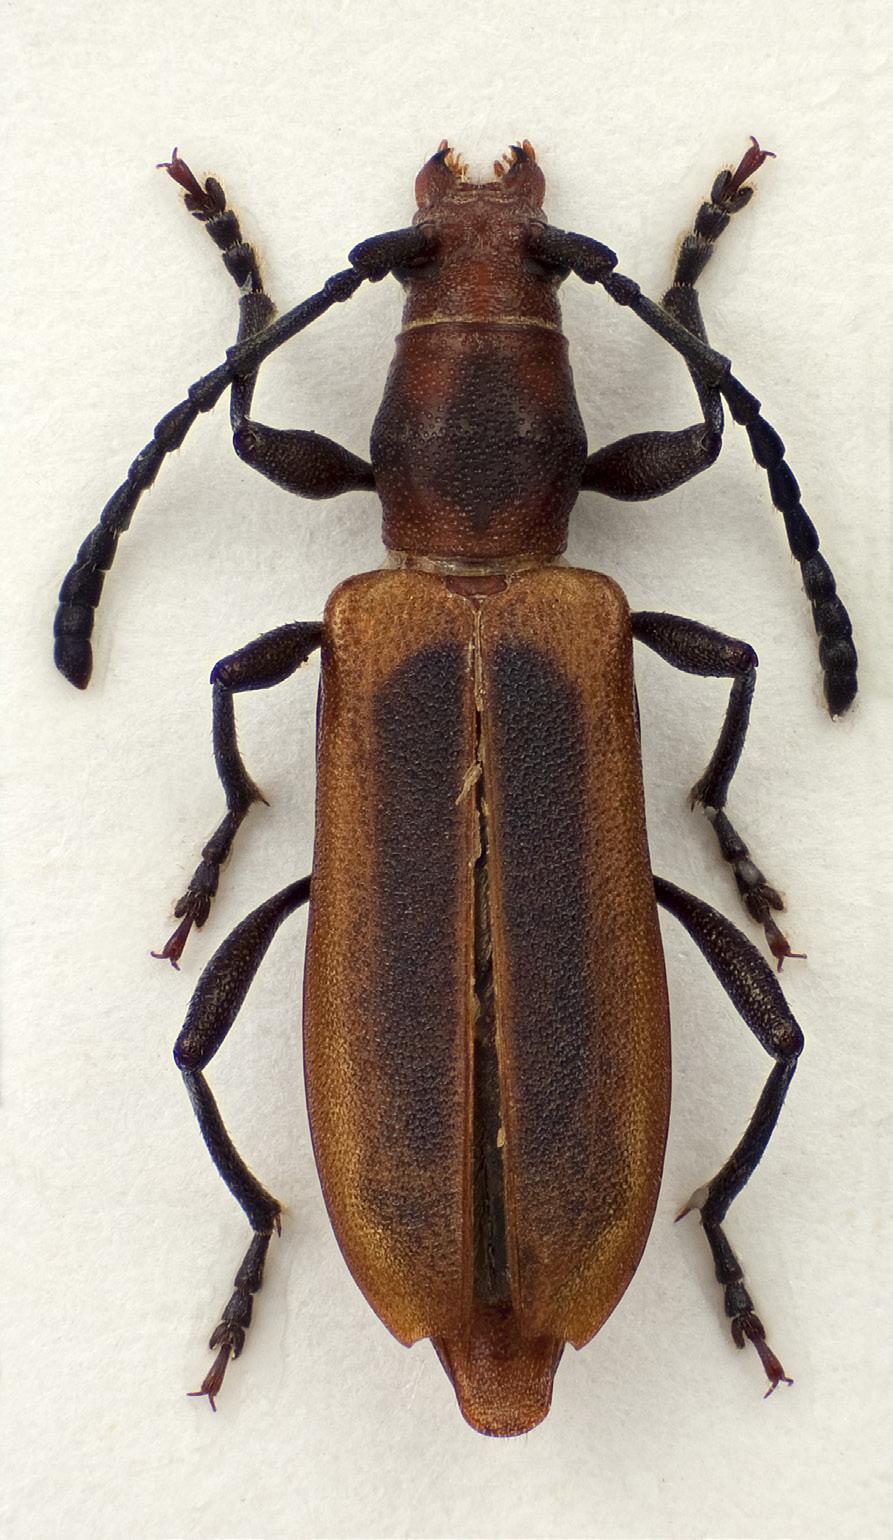 Norwegian Journal of Entomology 60, 246 282 (2013) 7a 7b FIGURES 7a b. D. vittata. 7a. D. vittata, 10.5mm (ABS). 7b. D. vittata, 10mm (KAG). Photos: Karsten Sund (NHM, Oslo). 1 [Tanzania, Ruvuma Reg.